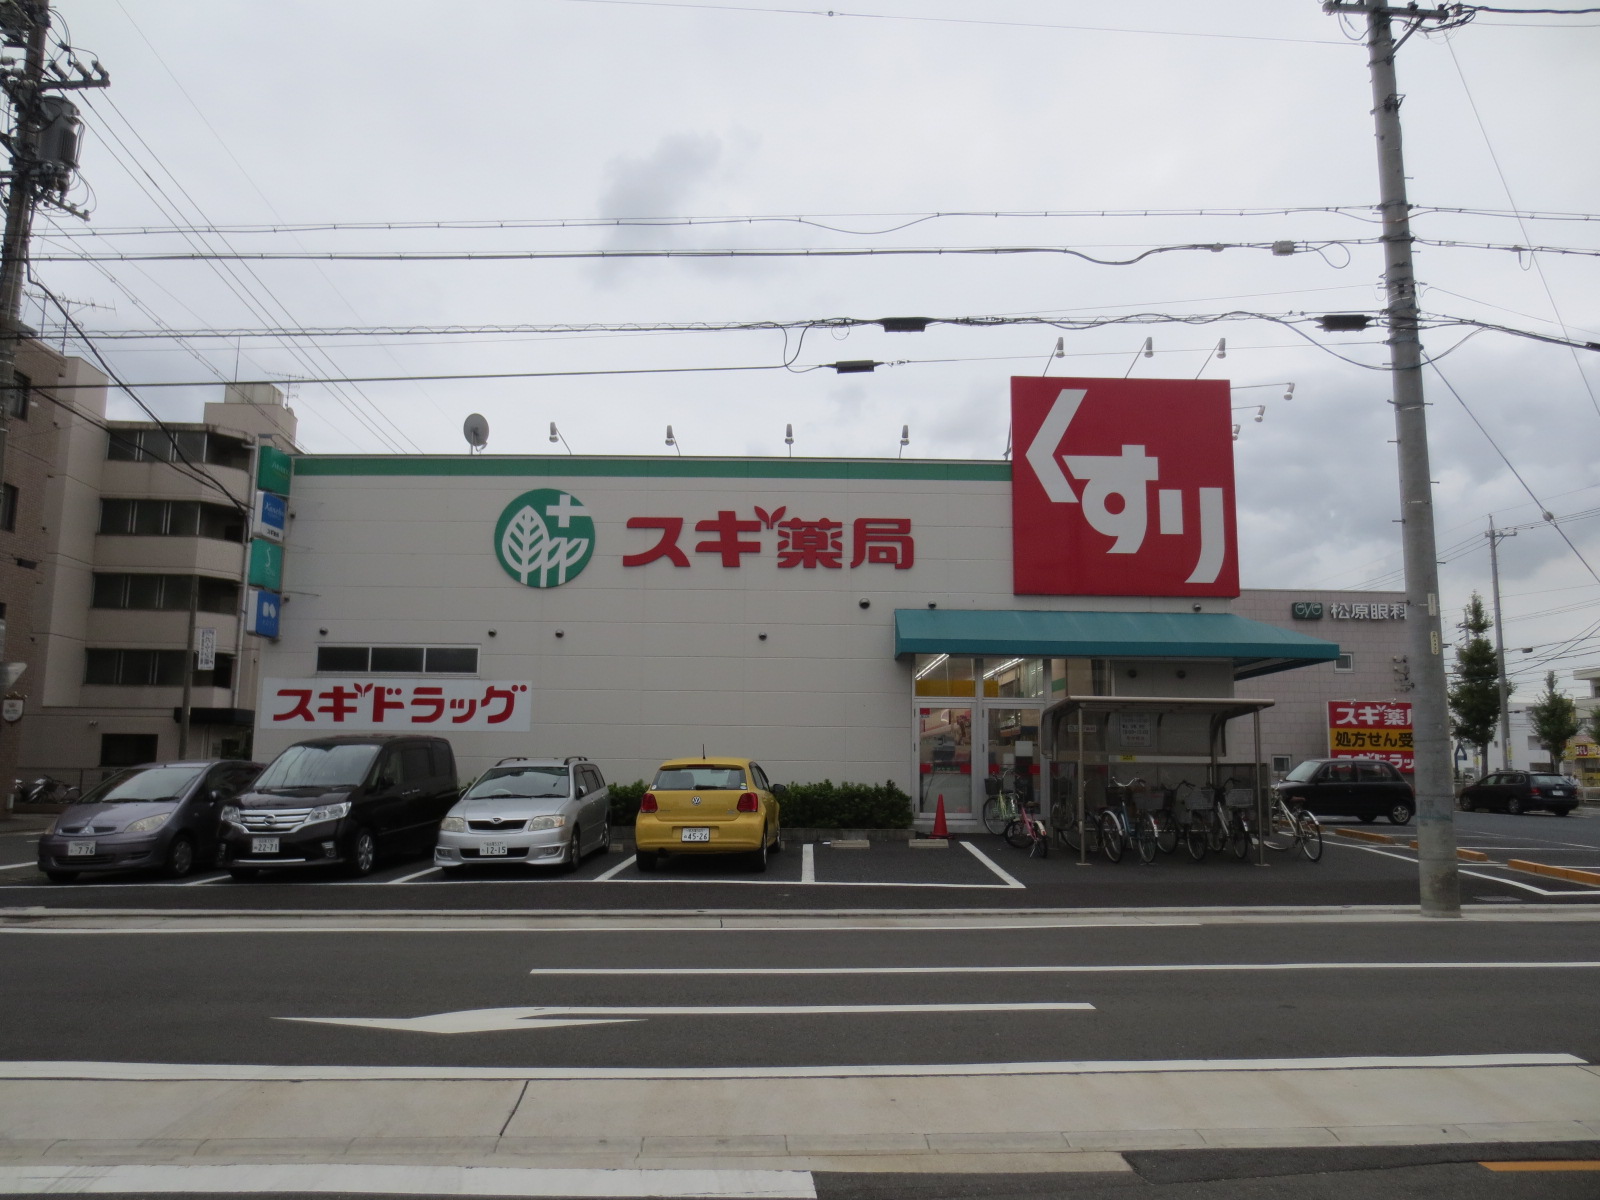 Dorakkusutoa. Cedar pharmacy Iwatsuka shop 627m until (drugstore)